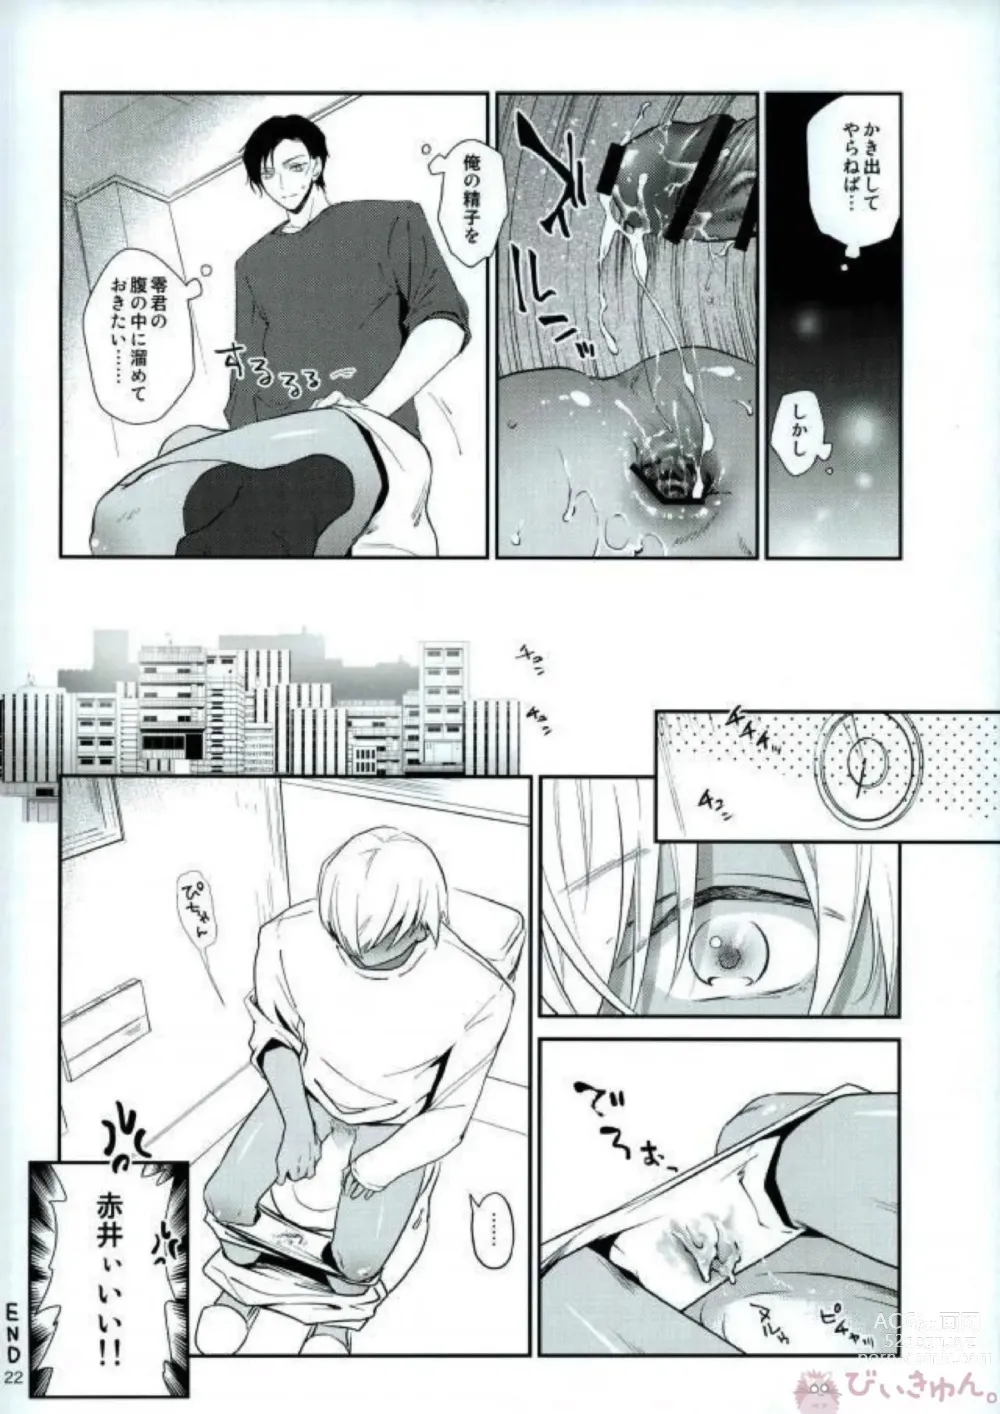 Page 20 of doujinshi SMK